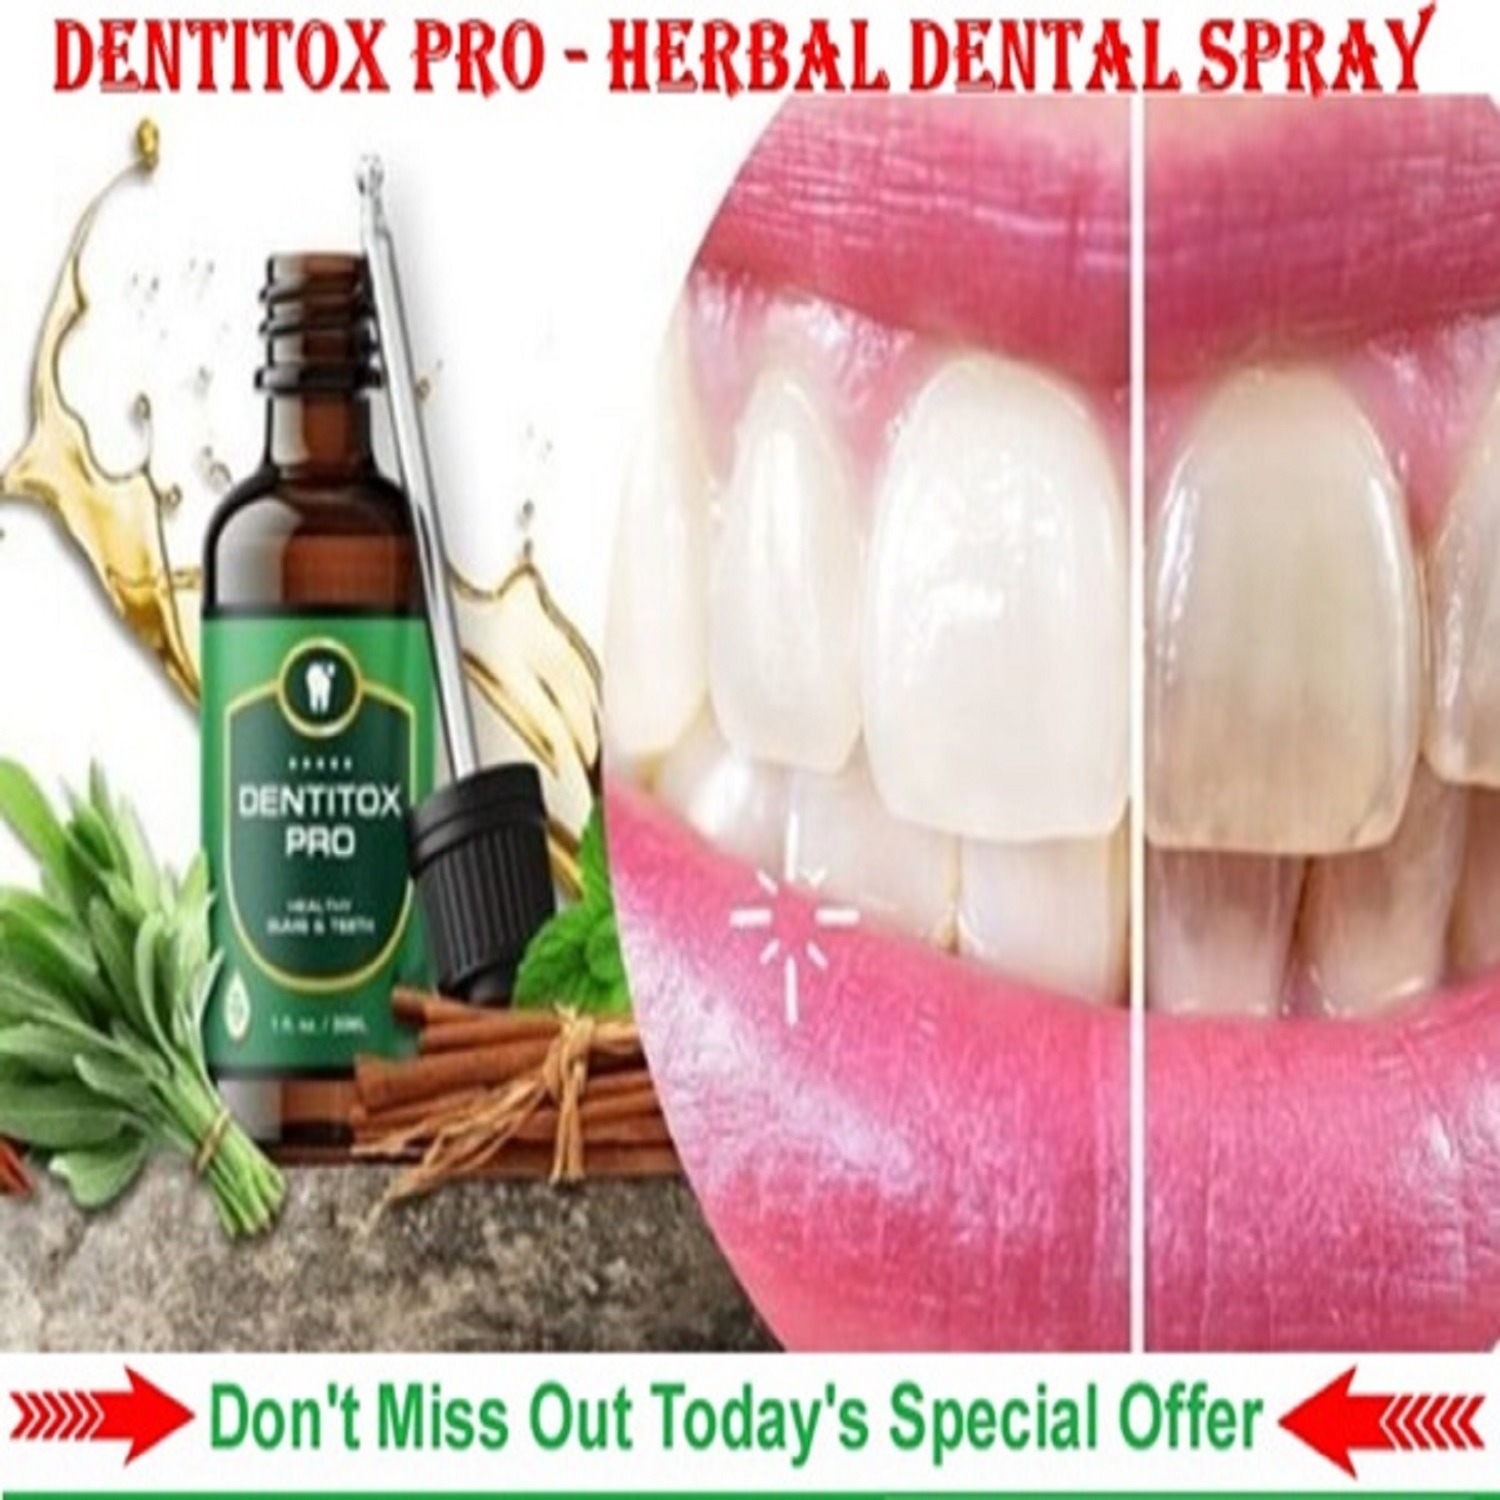 DentiTox Pro Drops For Dental Health - Home - Facebook